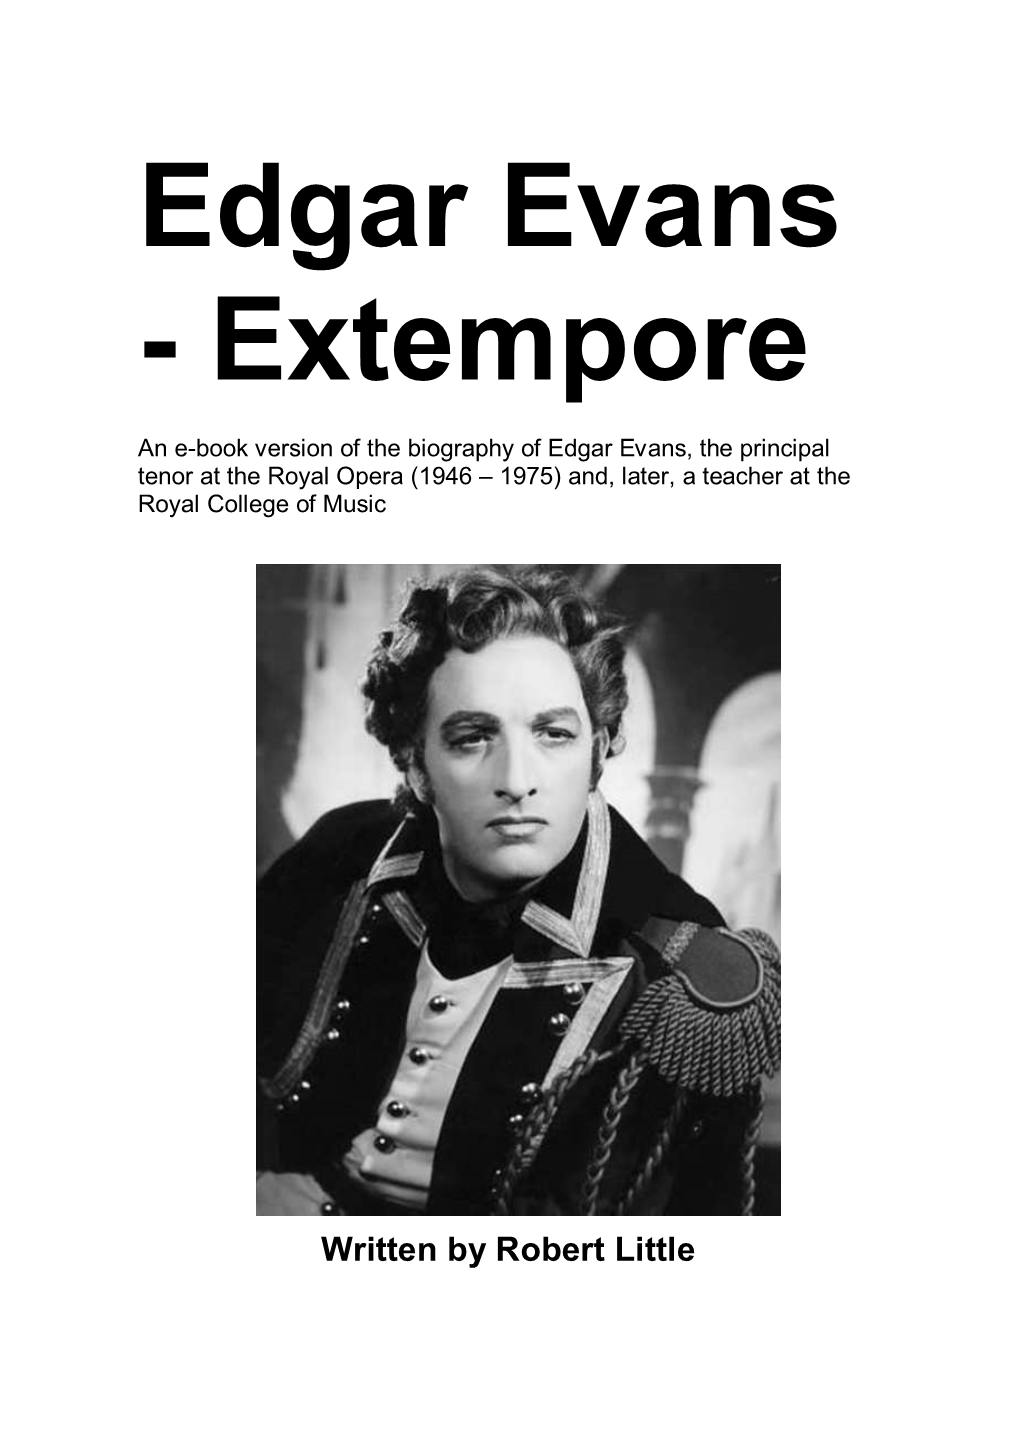 Edgar Evans - Extempore